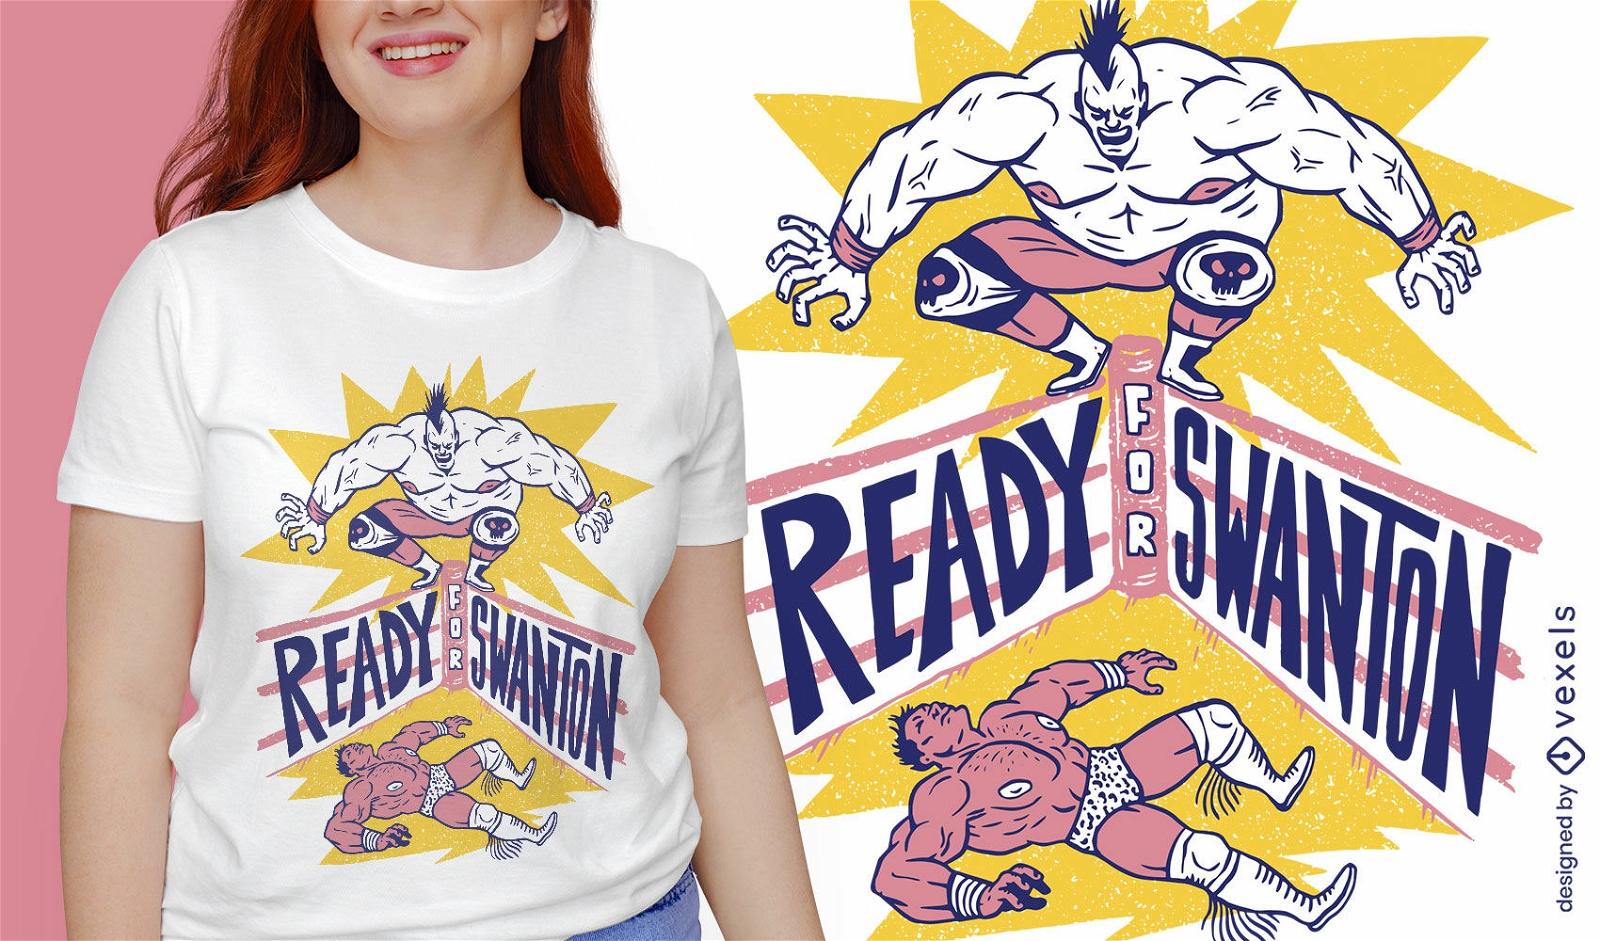 Swanton wrestling t-shirt design